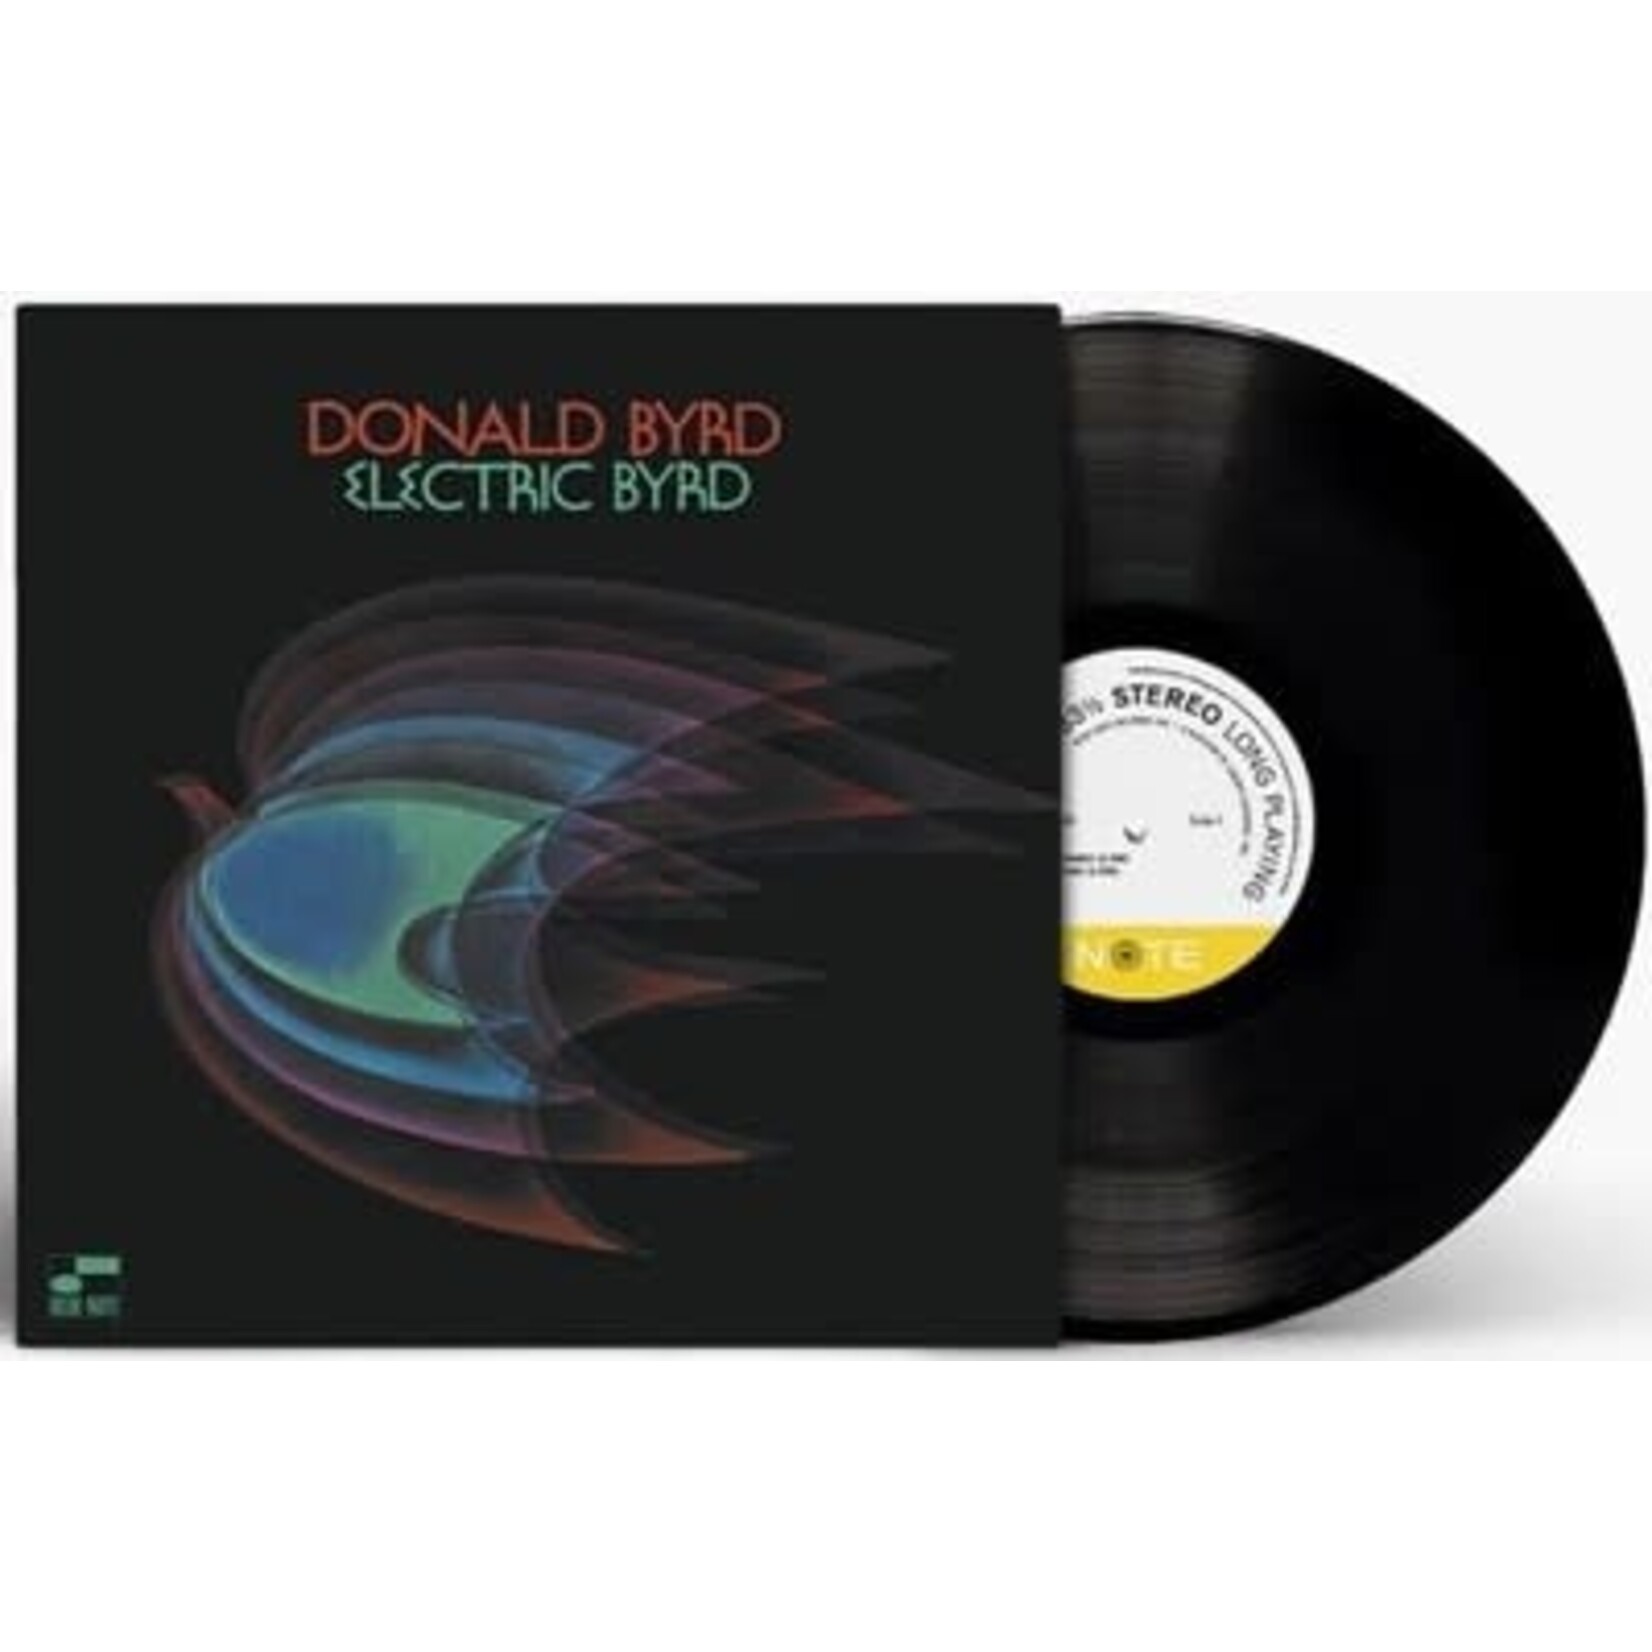 [New] Donald Byrd - Electric Byrd (black vinyl)